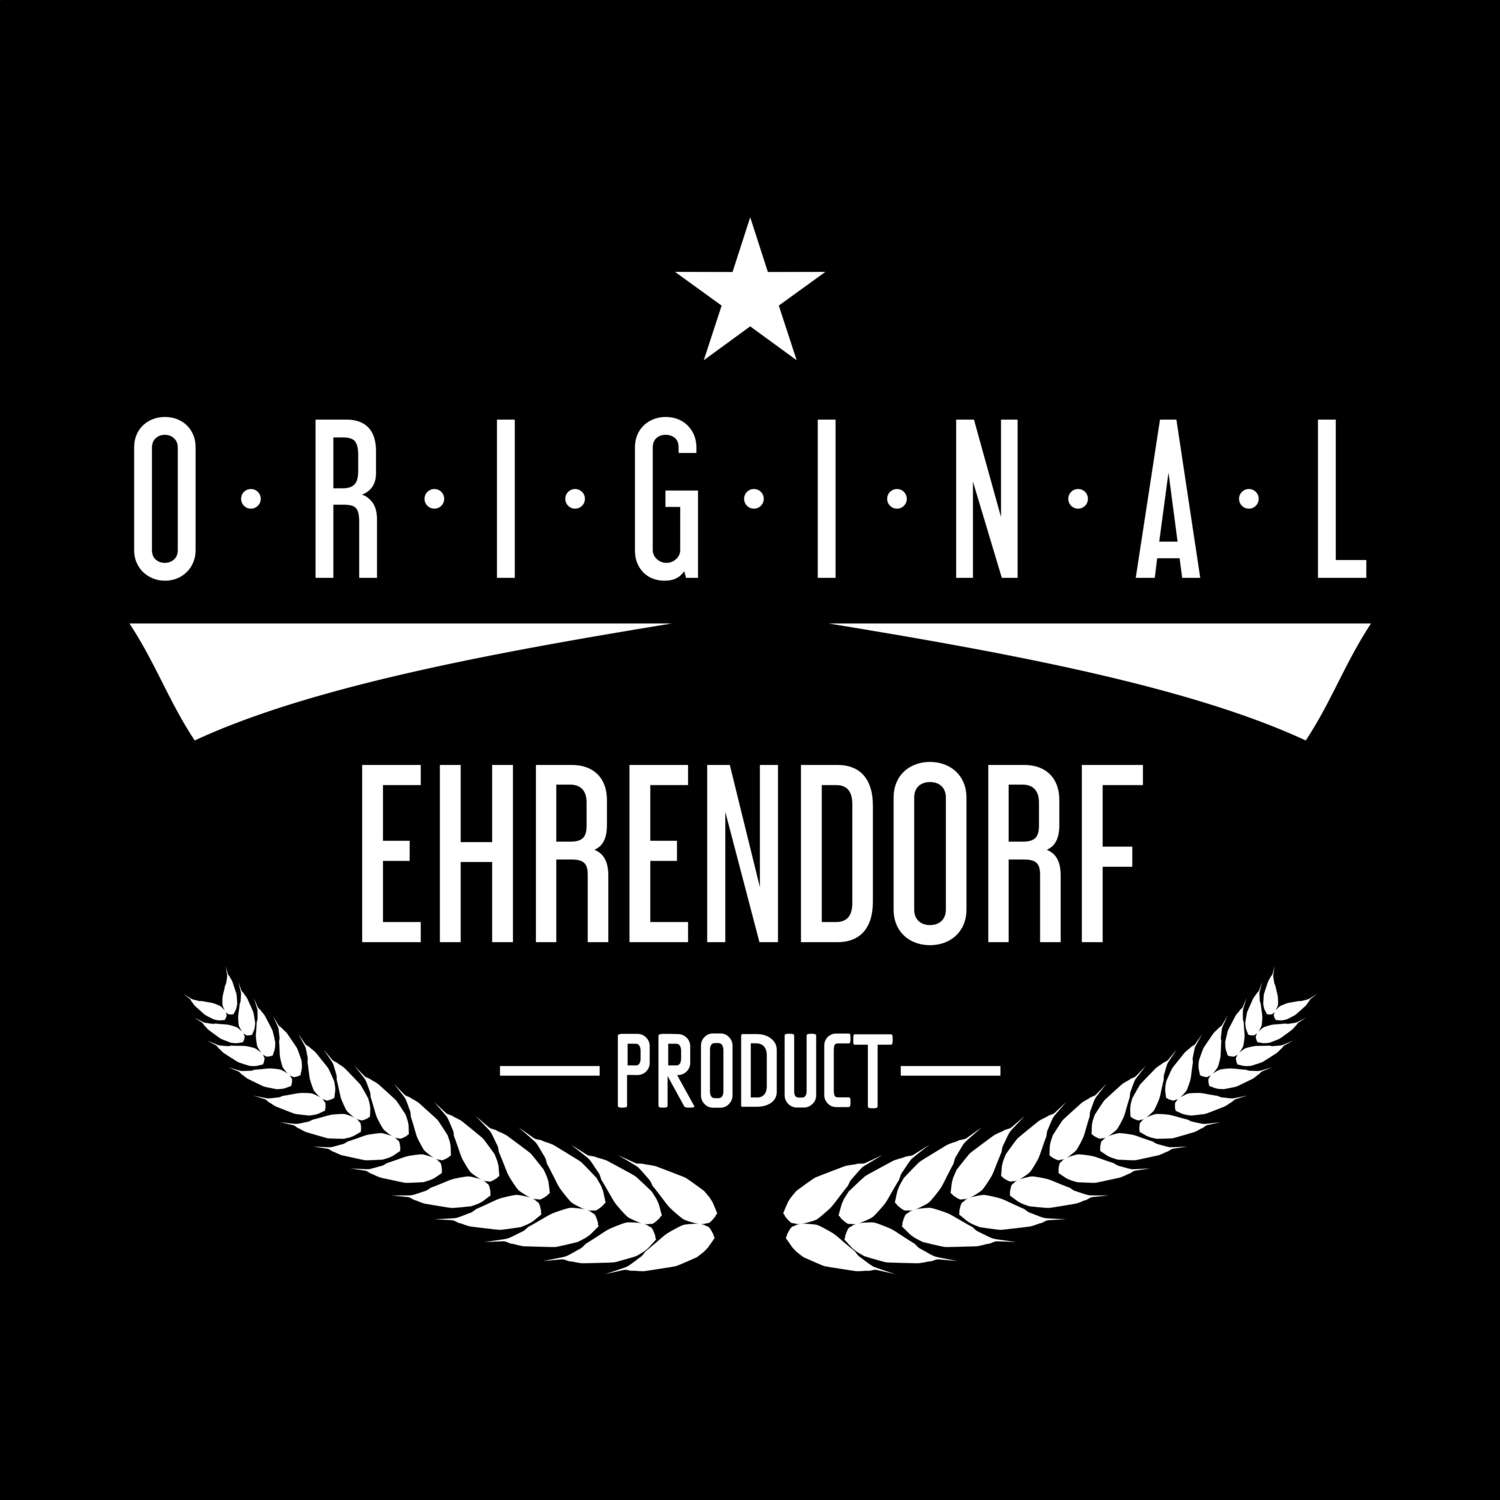 Ehrendorf T-Shirt »Original Product«